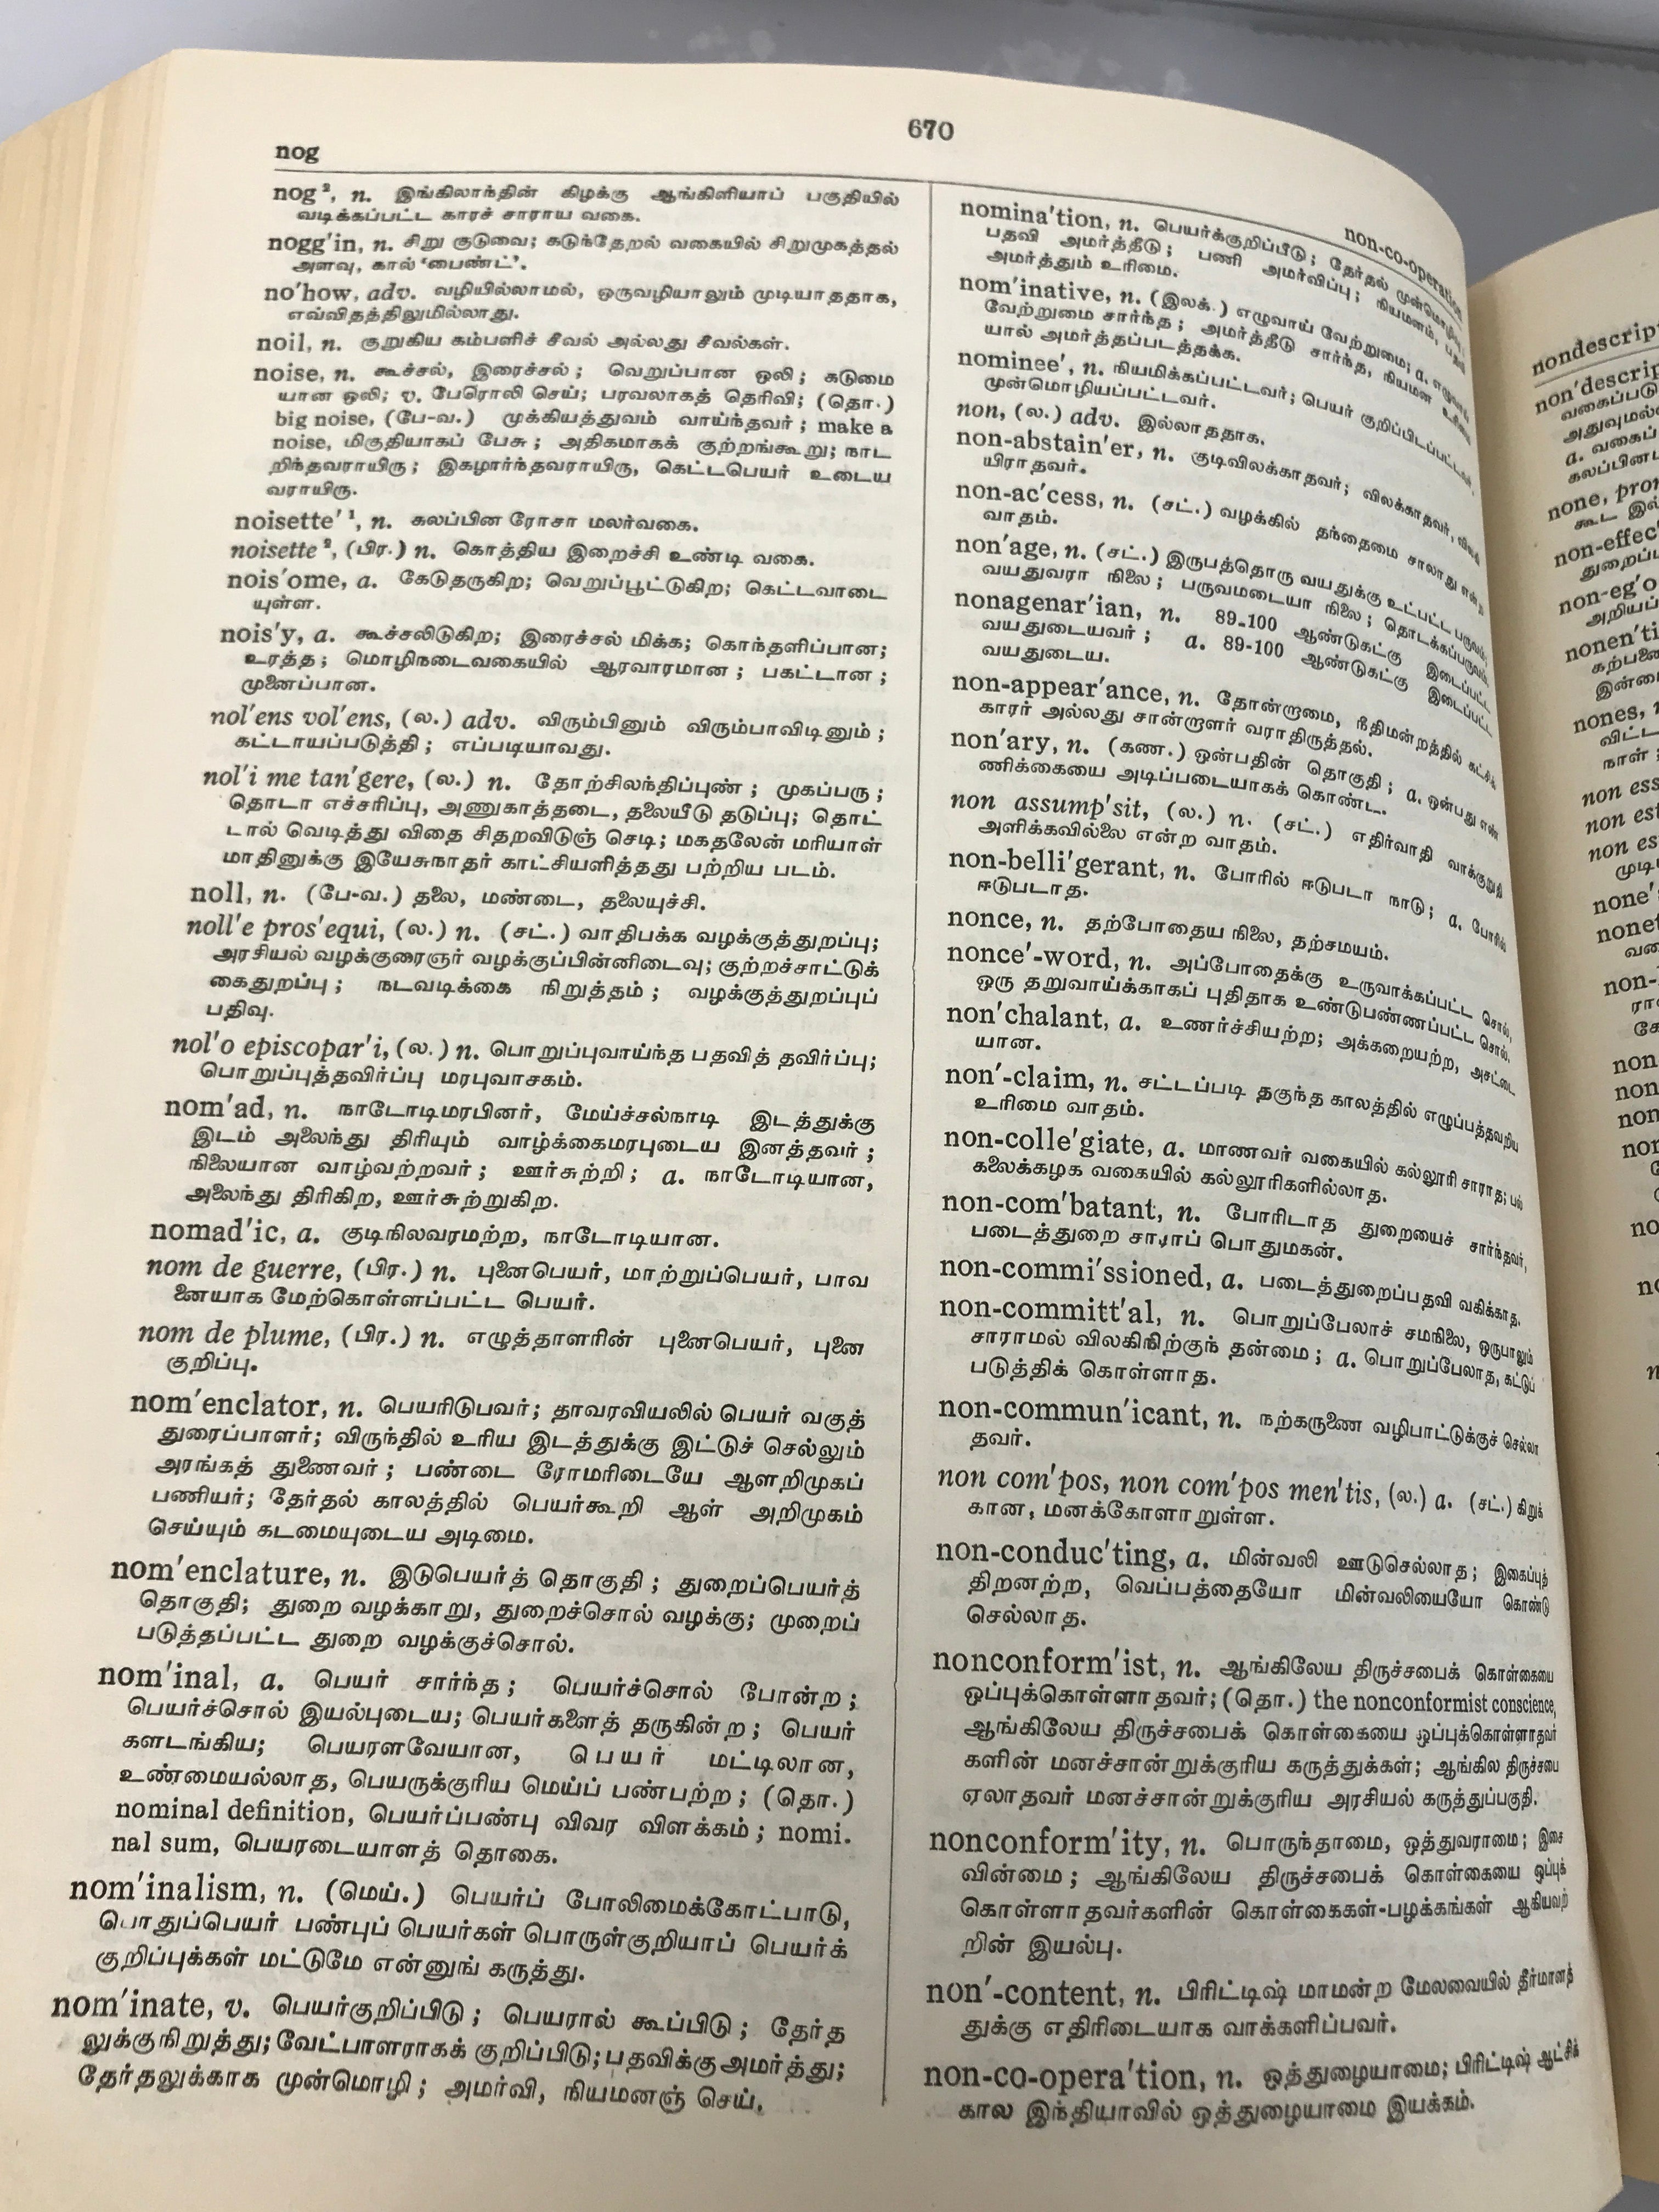 English-Tamil Dictionary University of Madras 1965 HC DJ